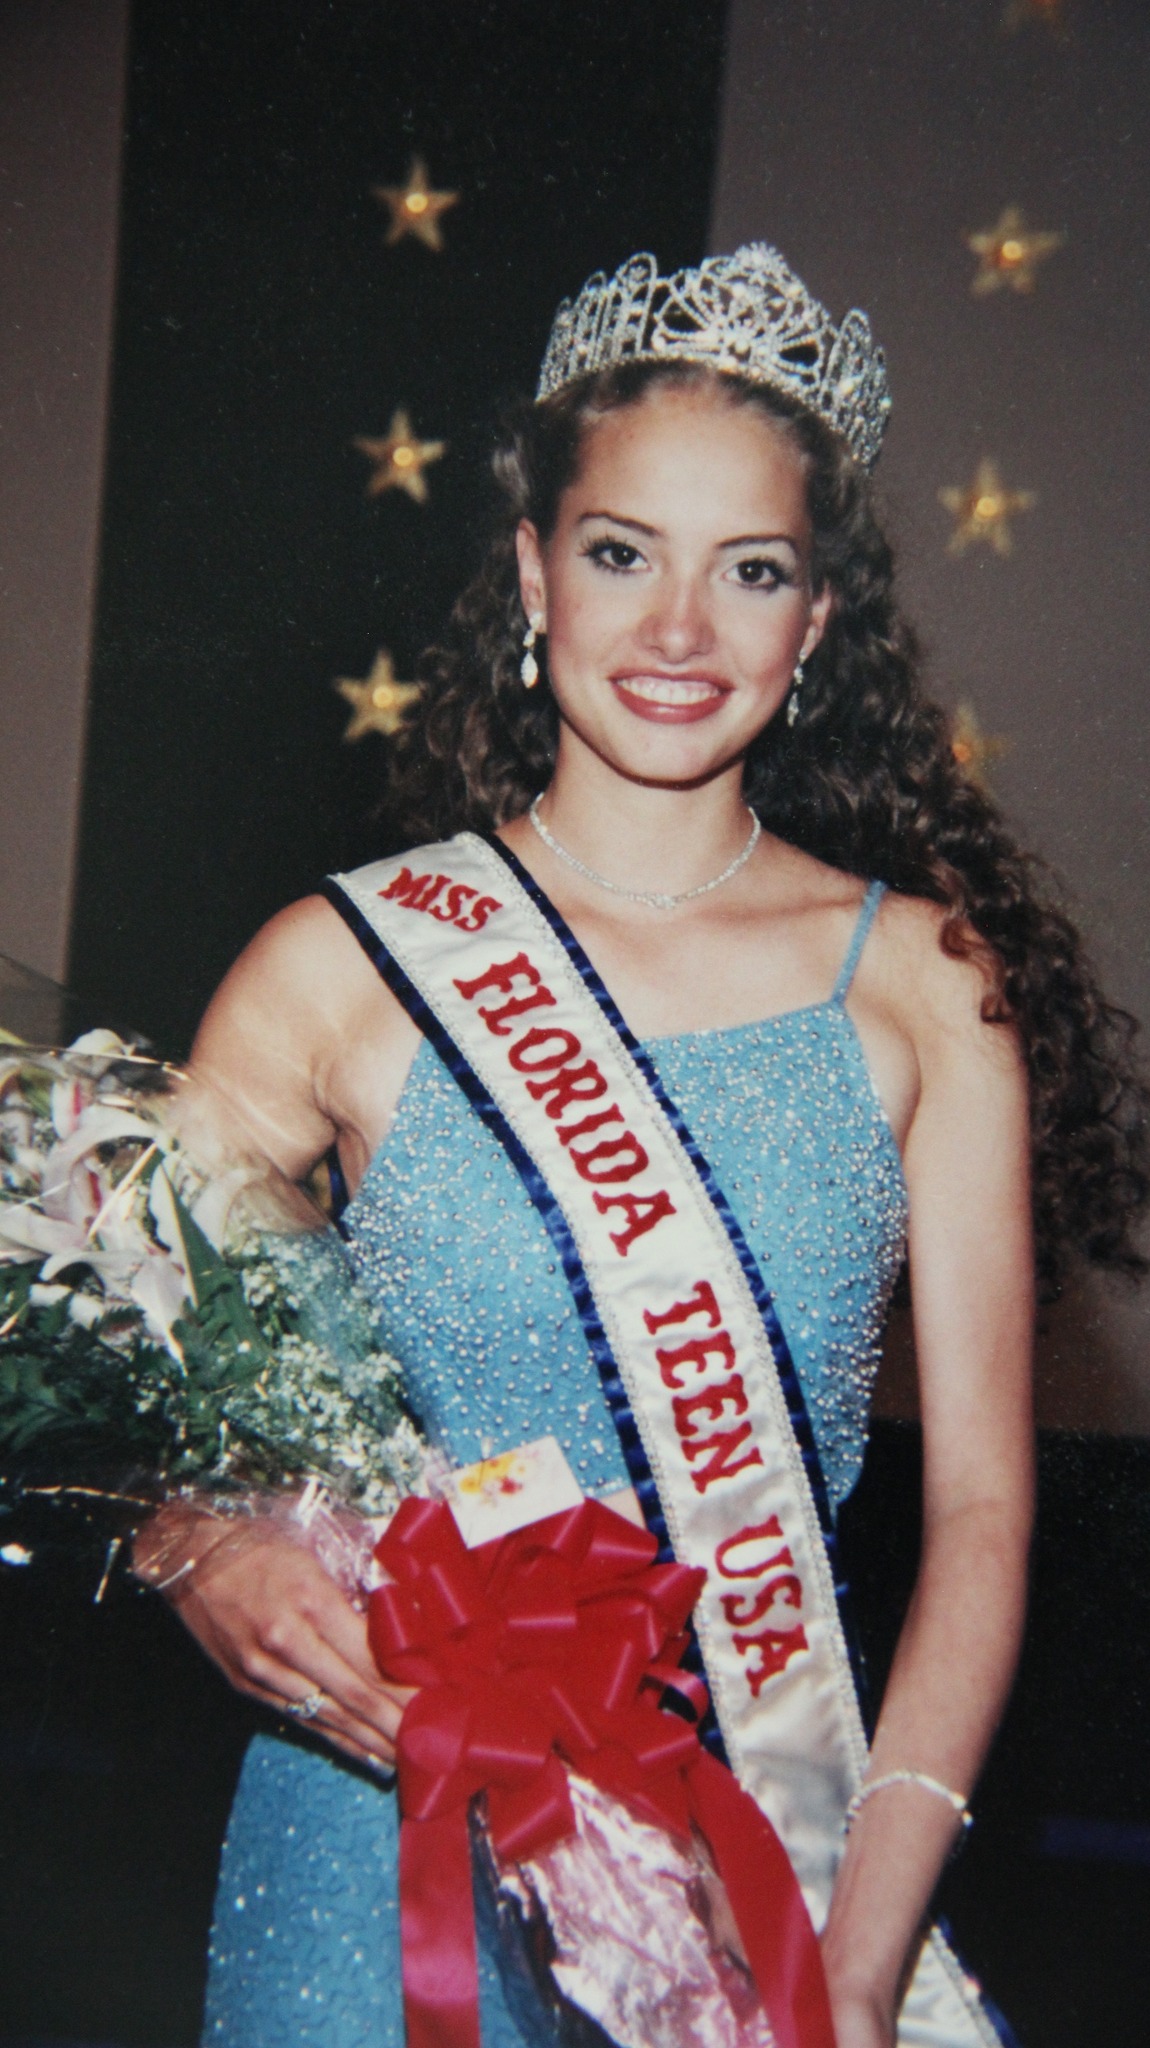 Miss-Florida-Teen-USA-2001-pageant-04